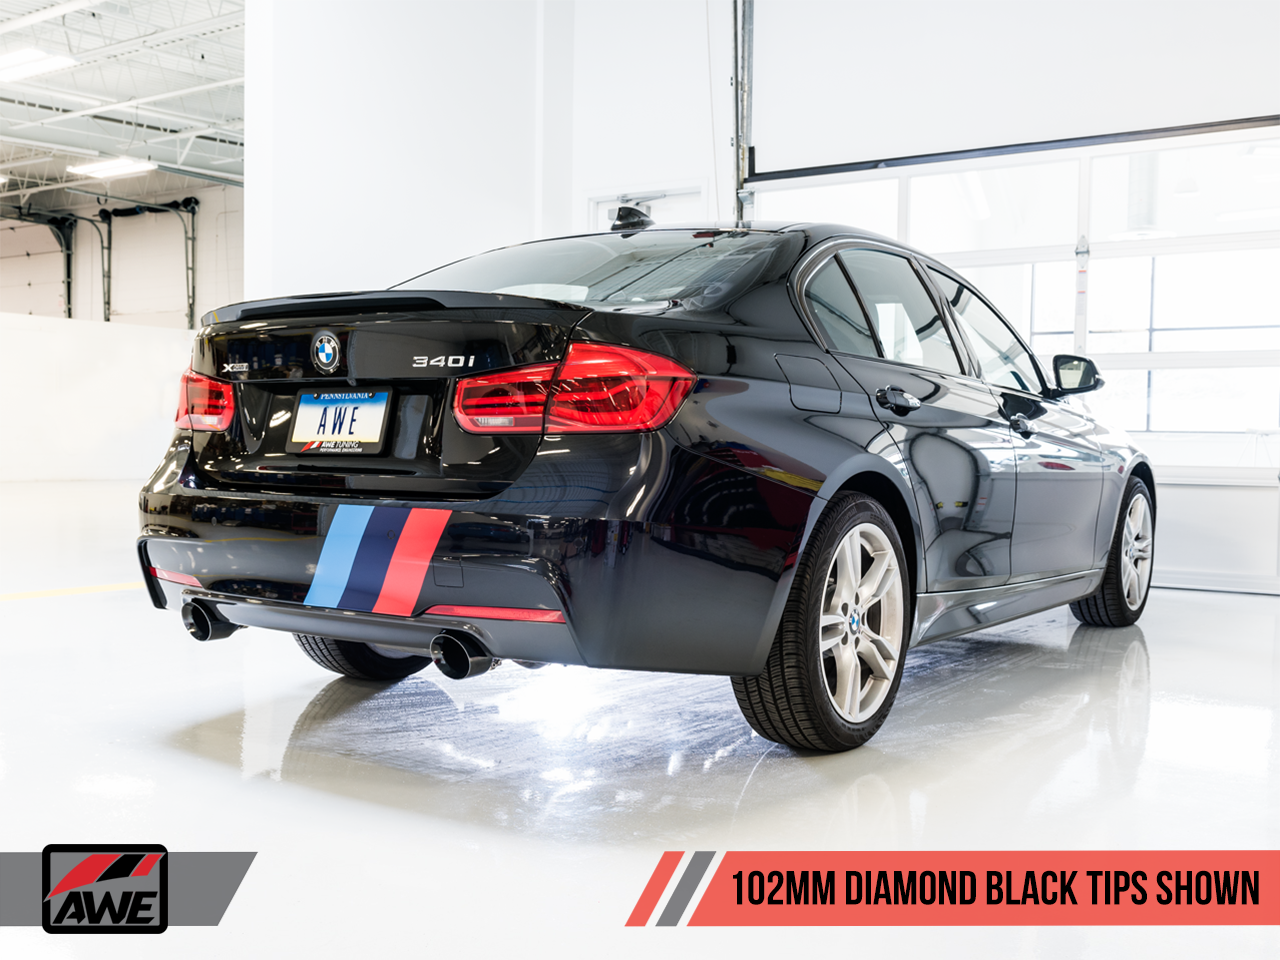 AWE Touring Edition Axle Back Exhaust for BMW F3X 340i / 440i - Diamond Black Tips (102mm)